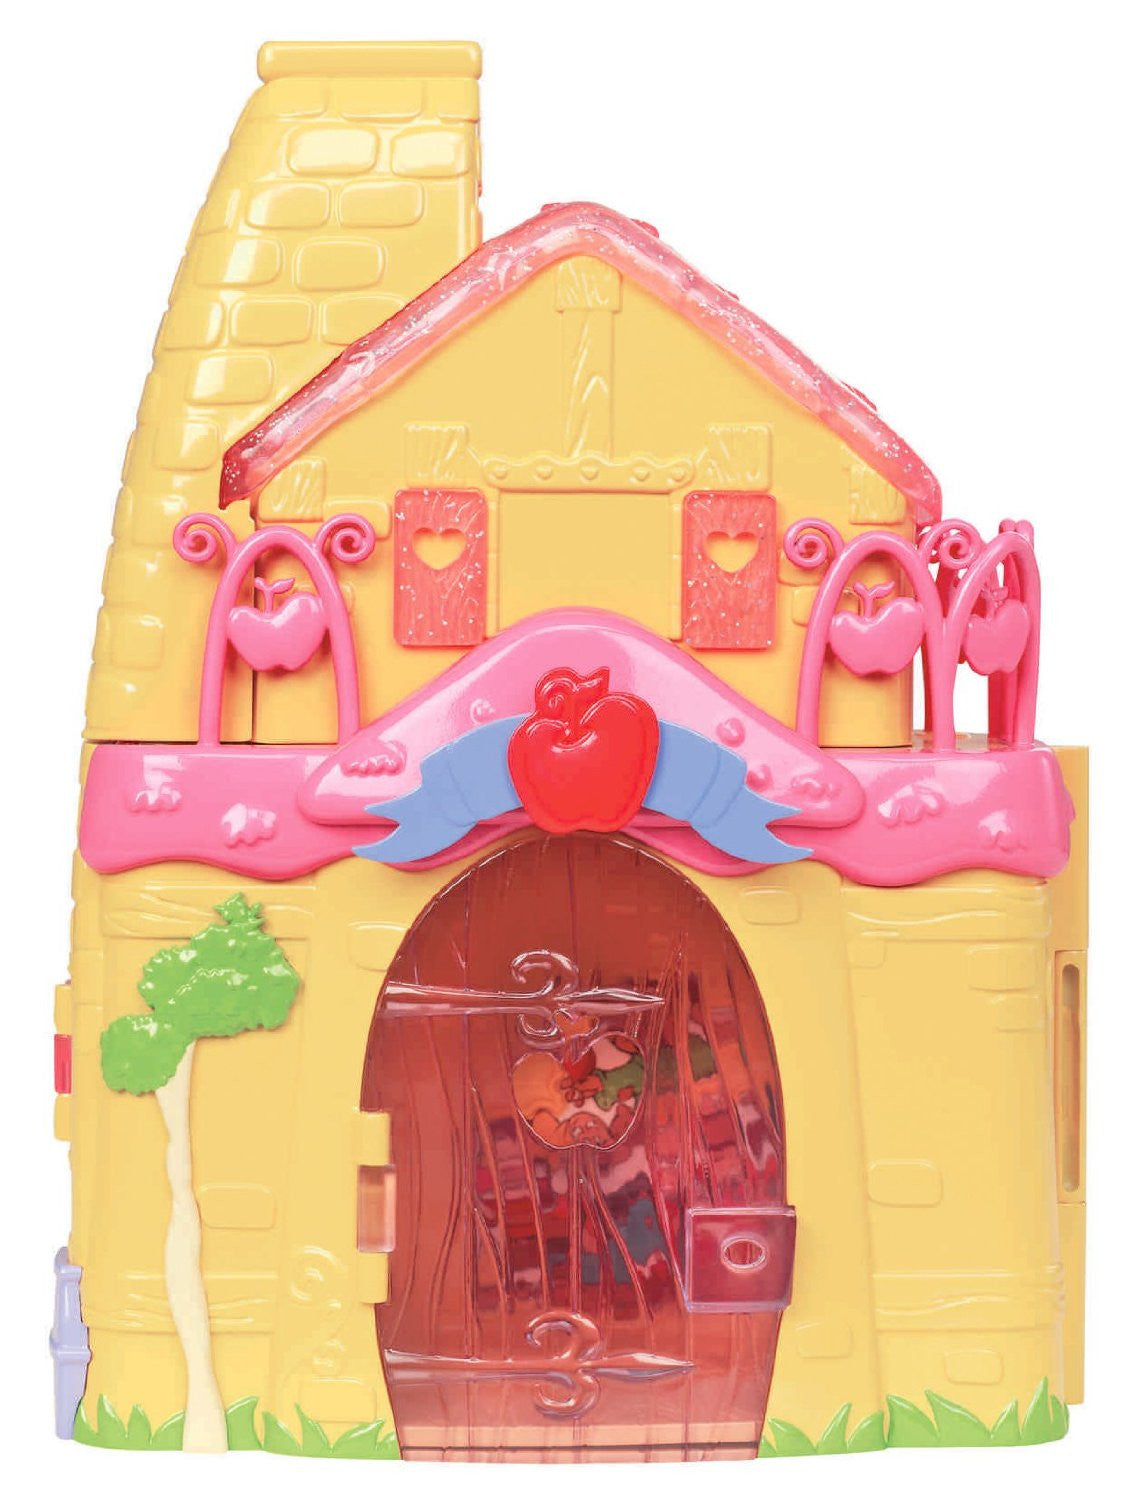 Disney Princess Royal Party Snow White Palace Playset - buy-online